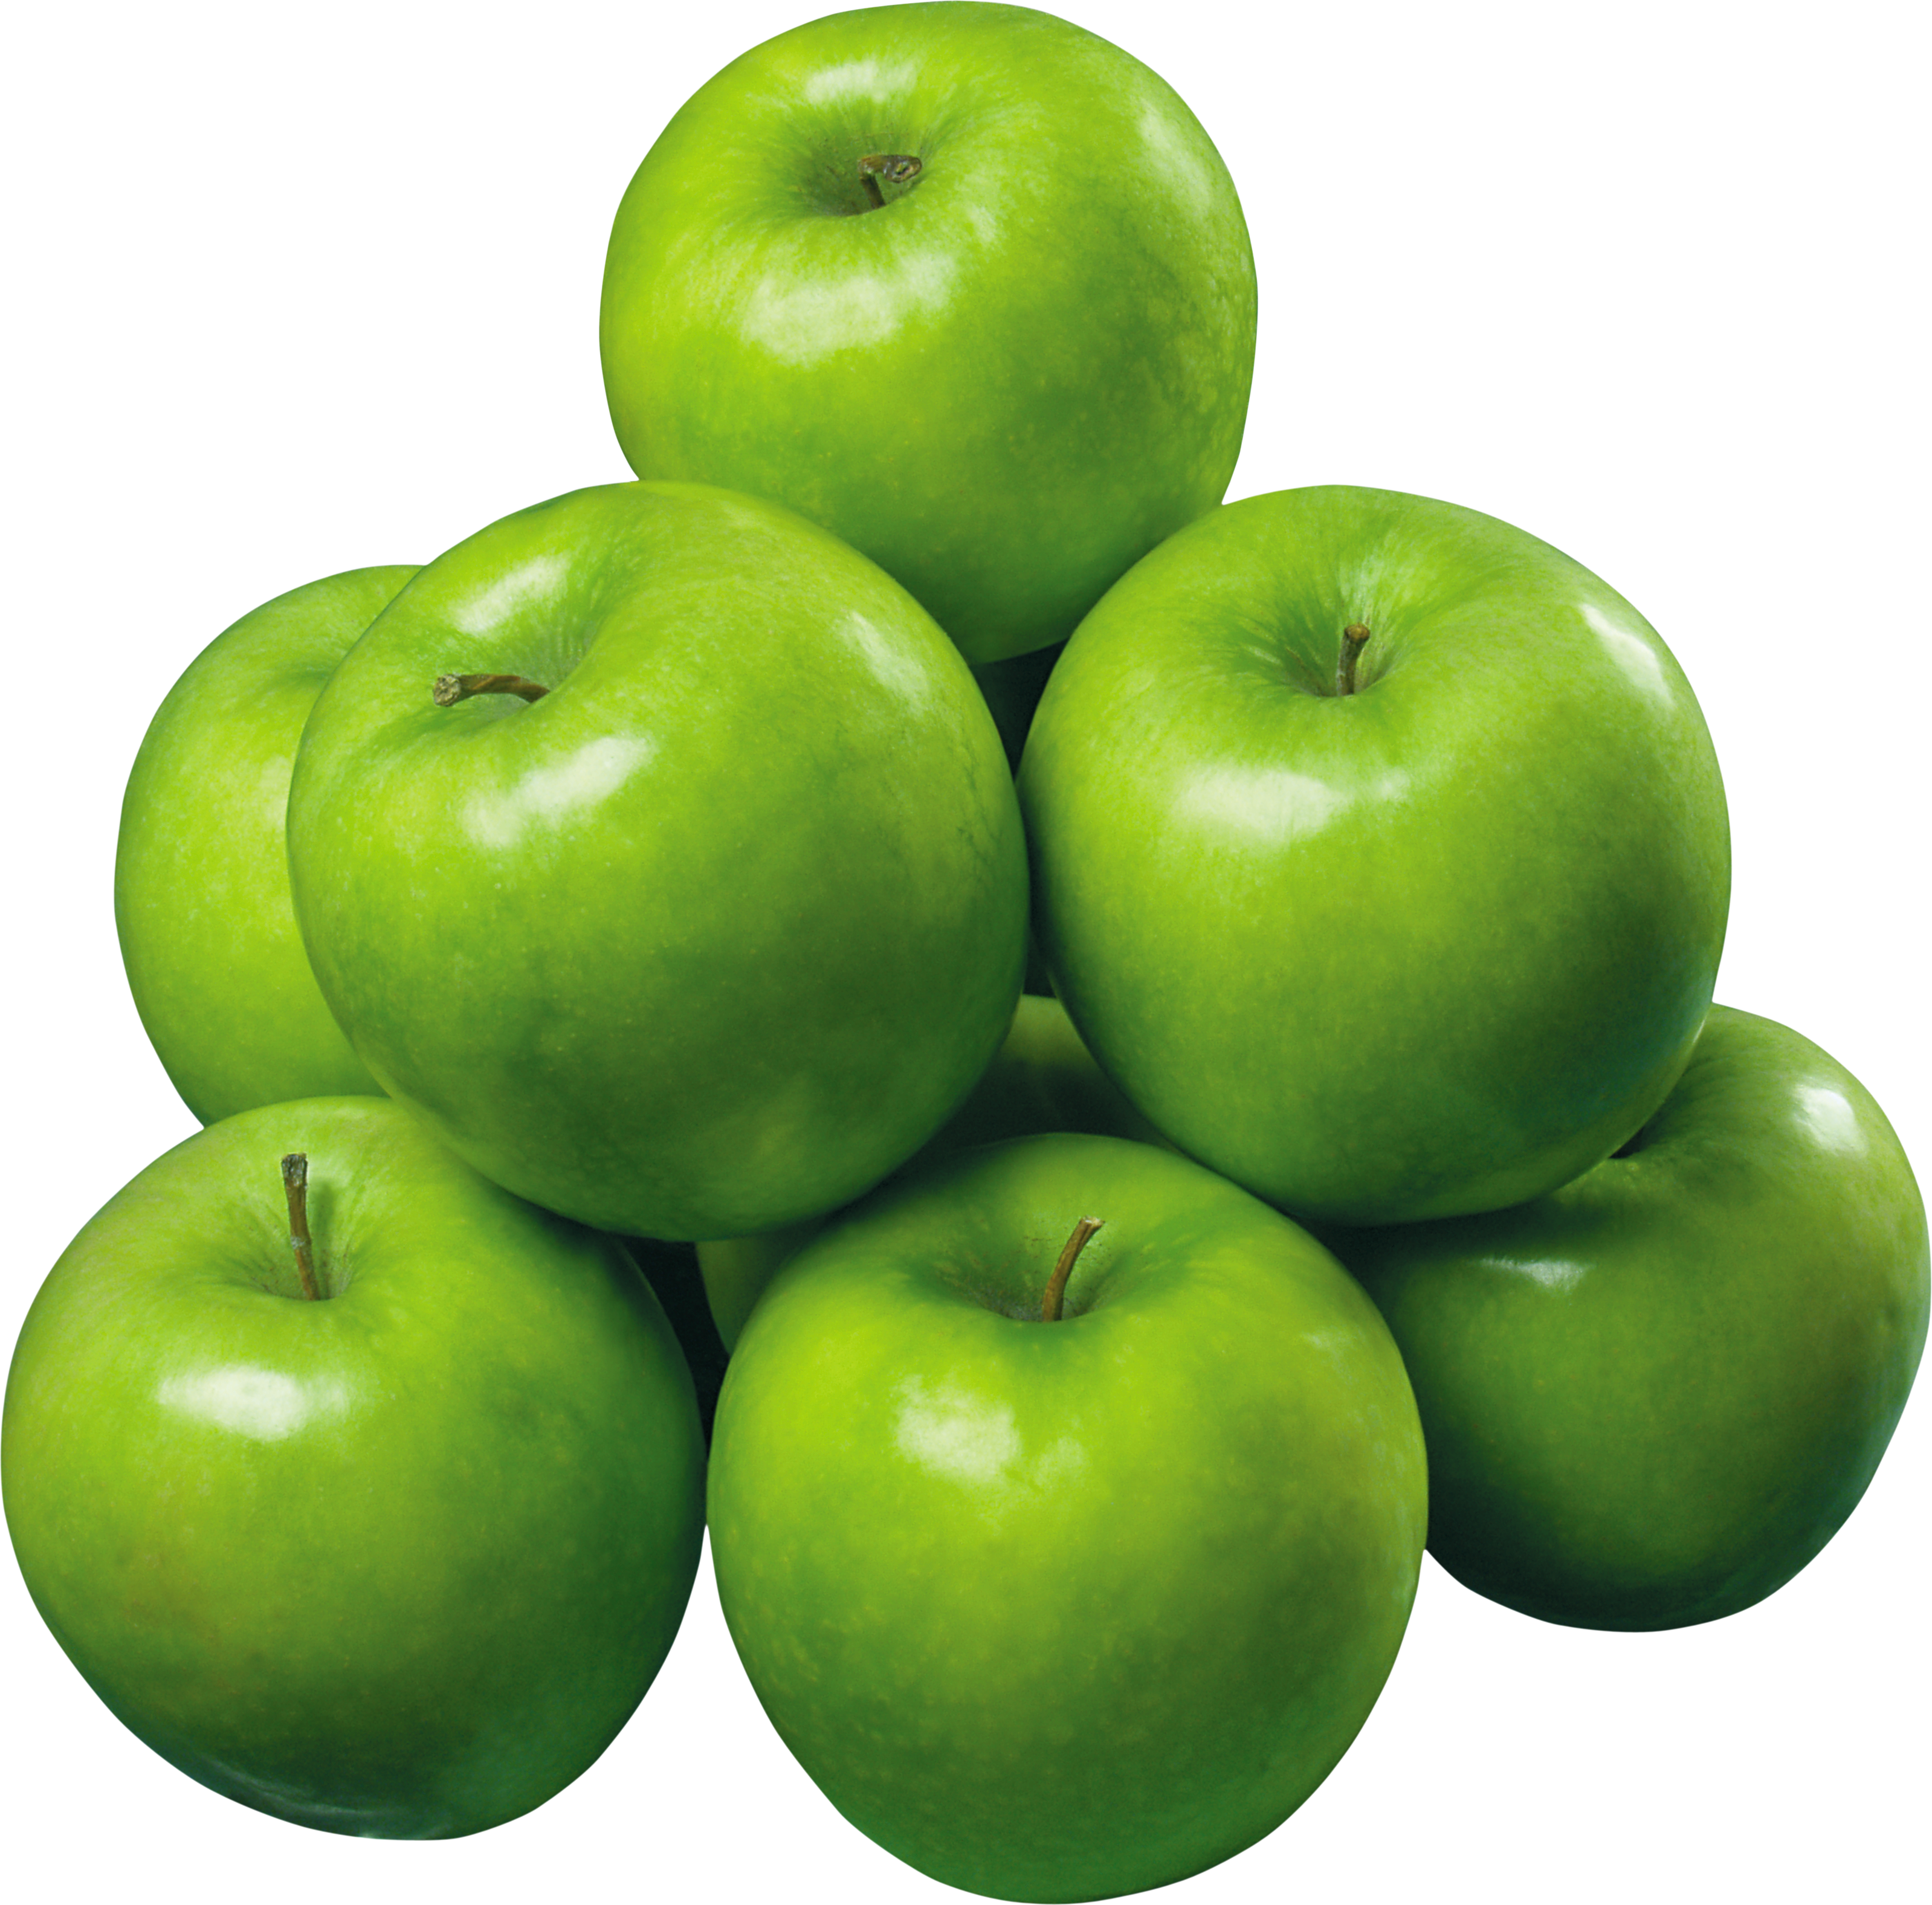 Green apples photo